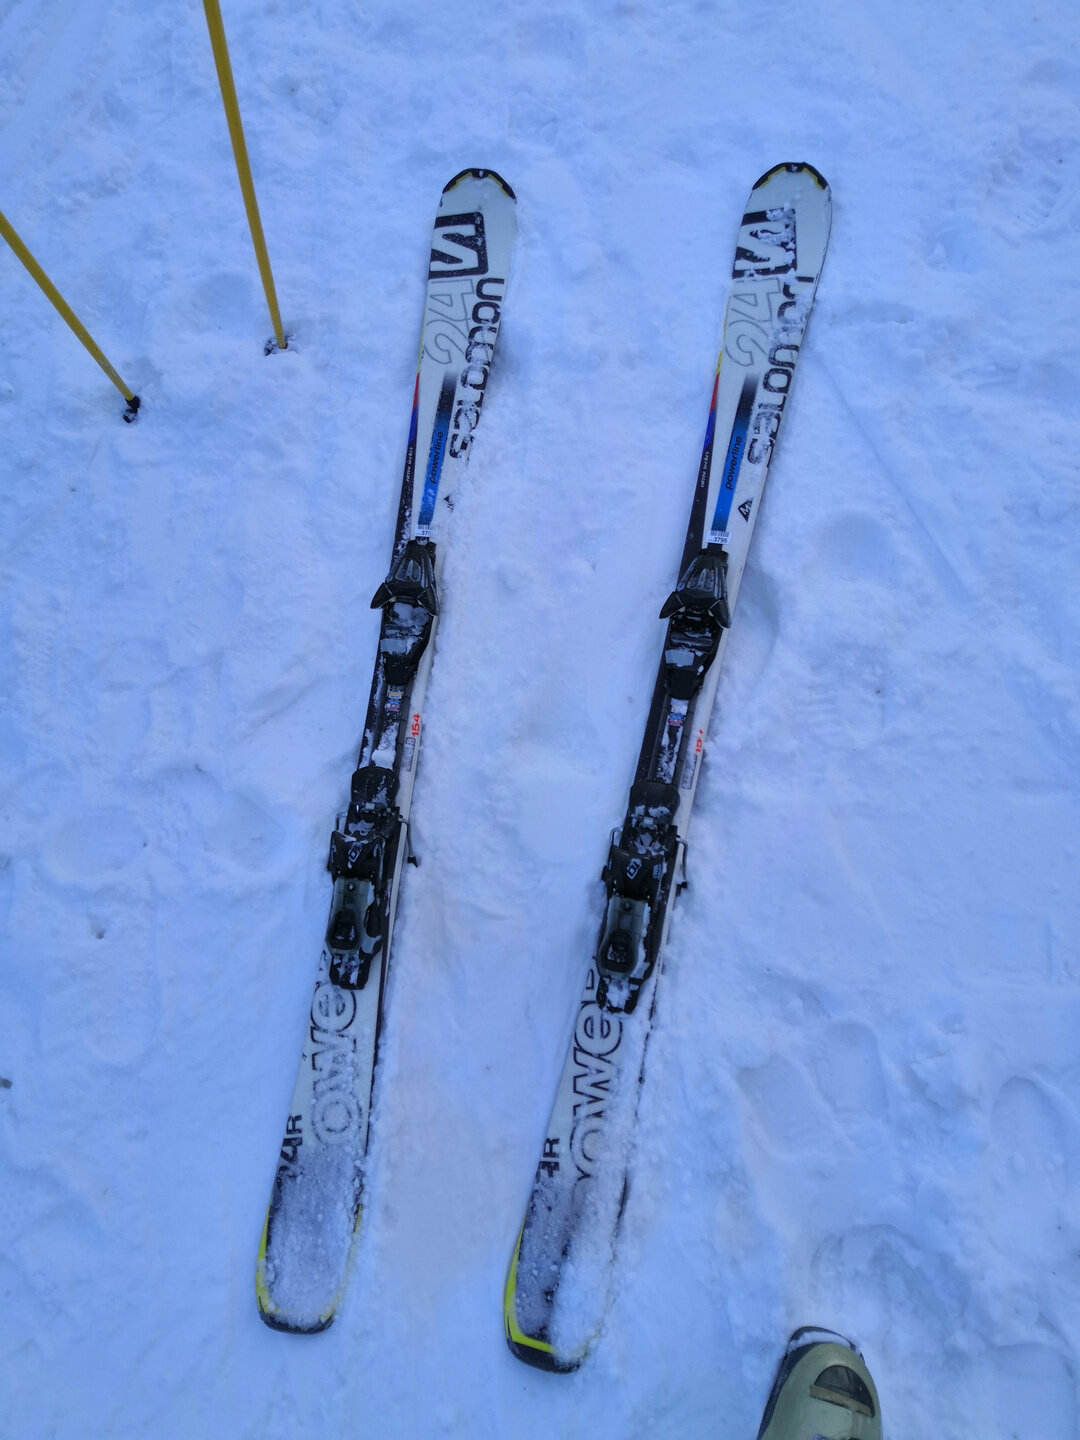 <span lang="ru">Эти лыжи мне понравились</span><span lang="en">I liked this ski</span>